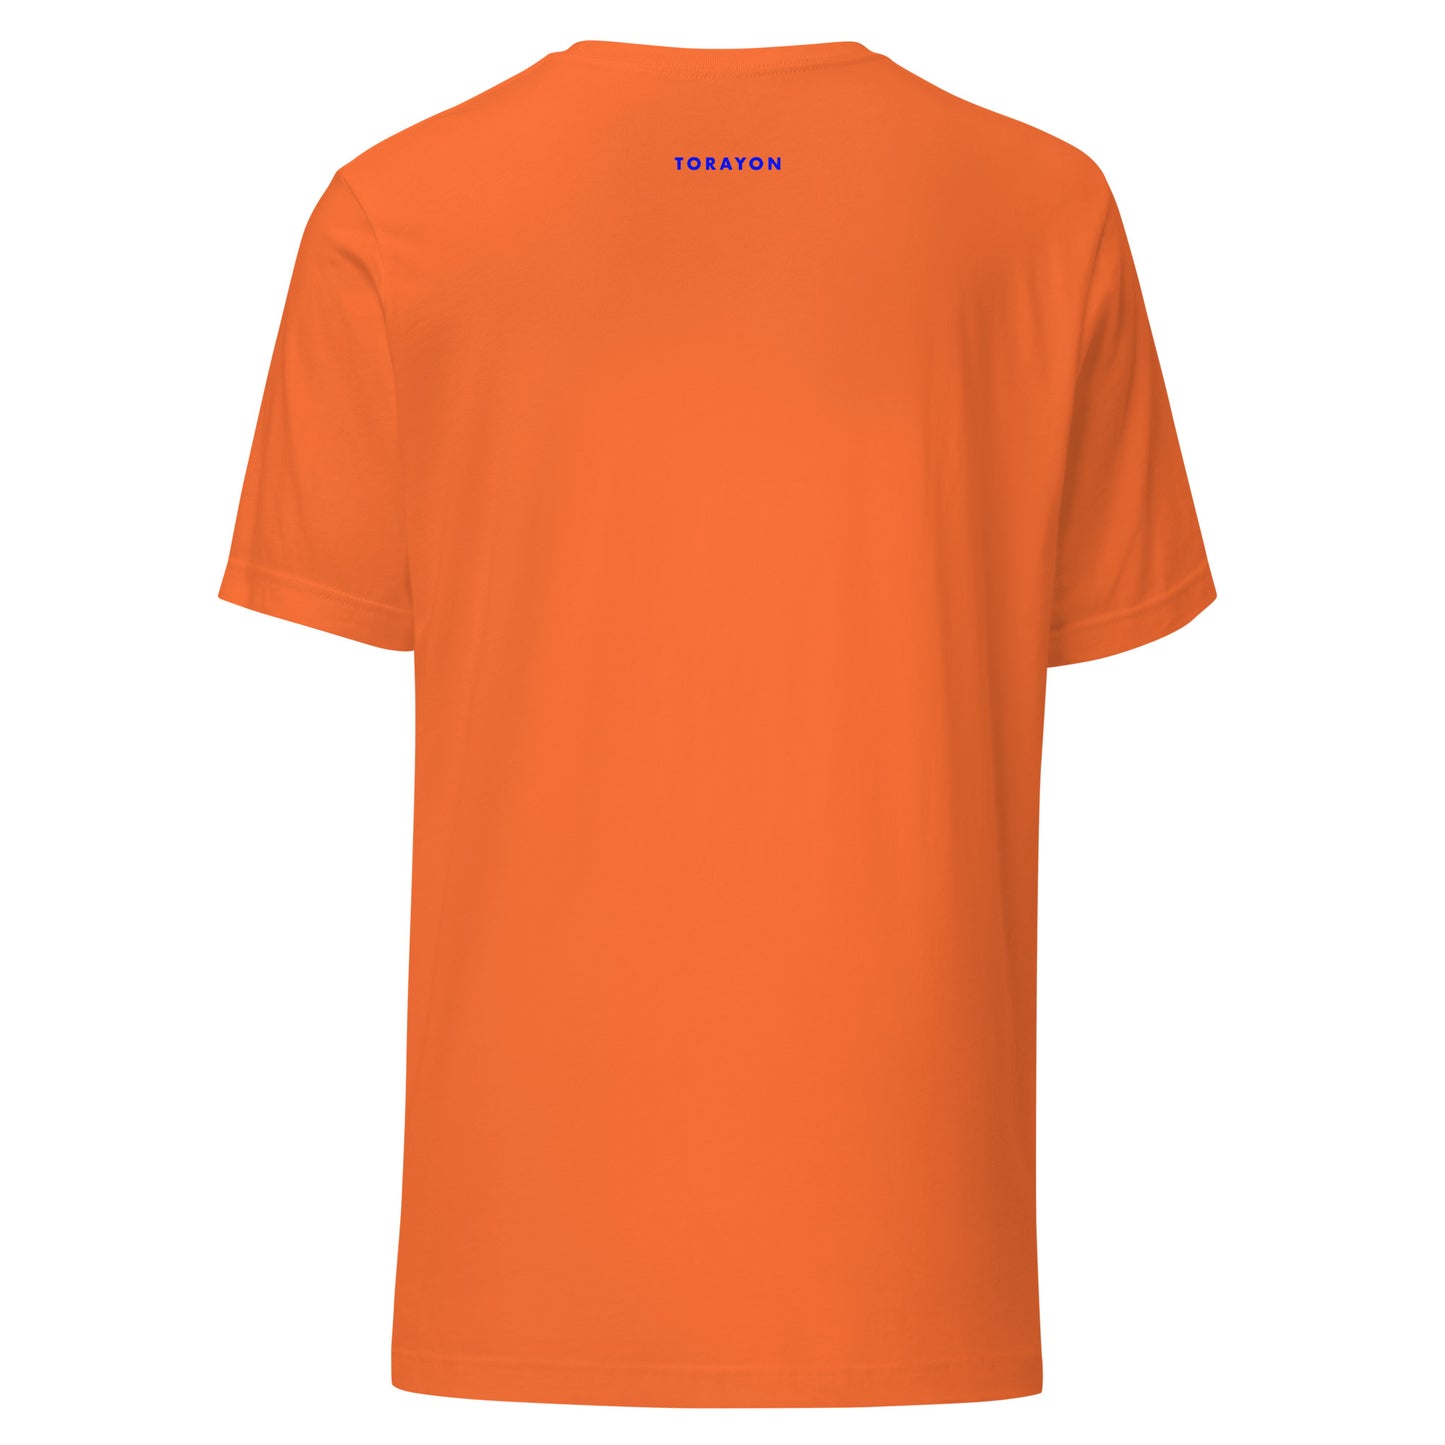 TORAYON (Bl) Unisex t-shirt